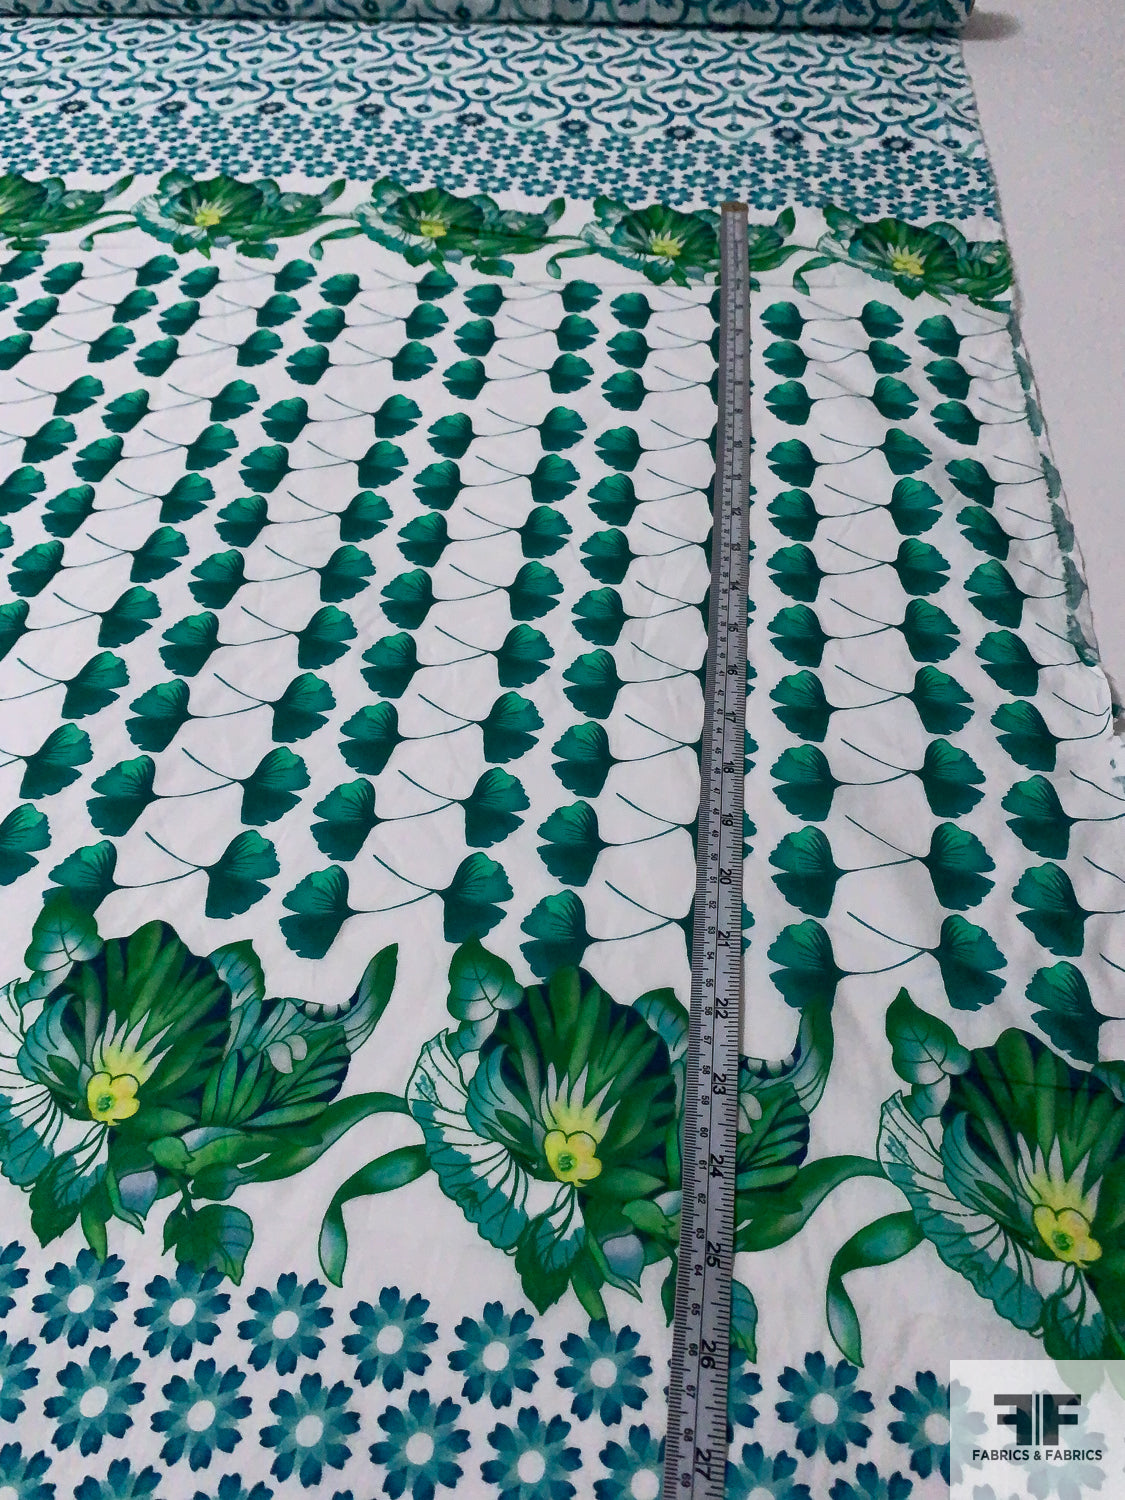 Multi-Pattern Printed Cotton Voile Panel - Green / Teal / Light Seafoam